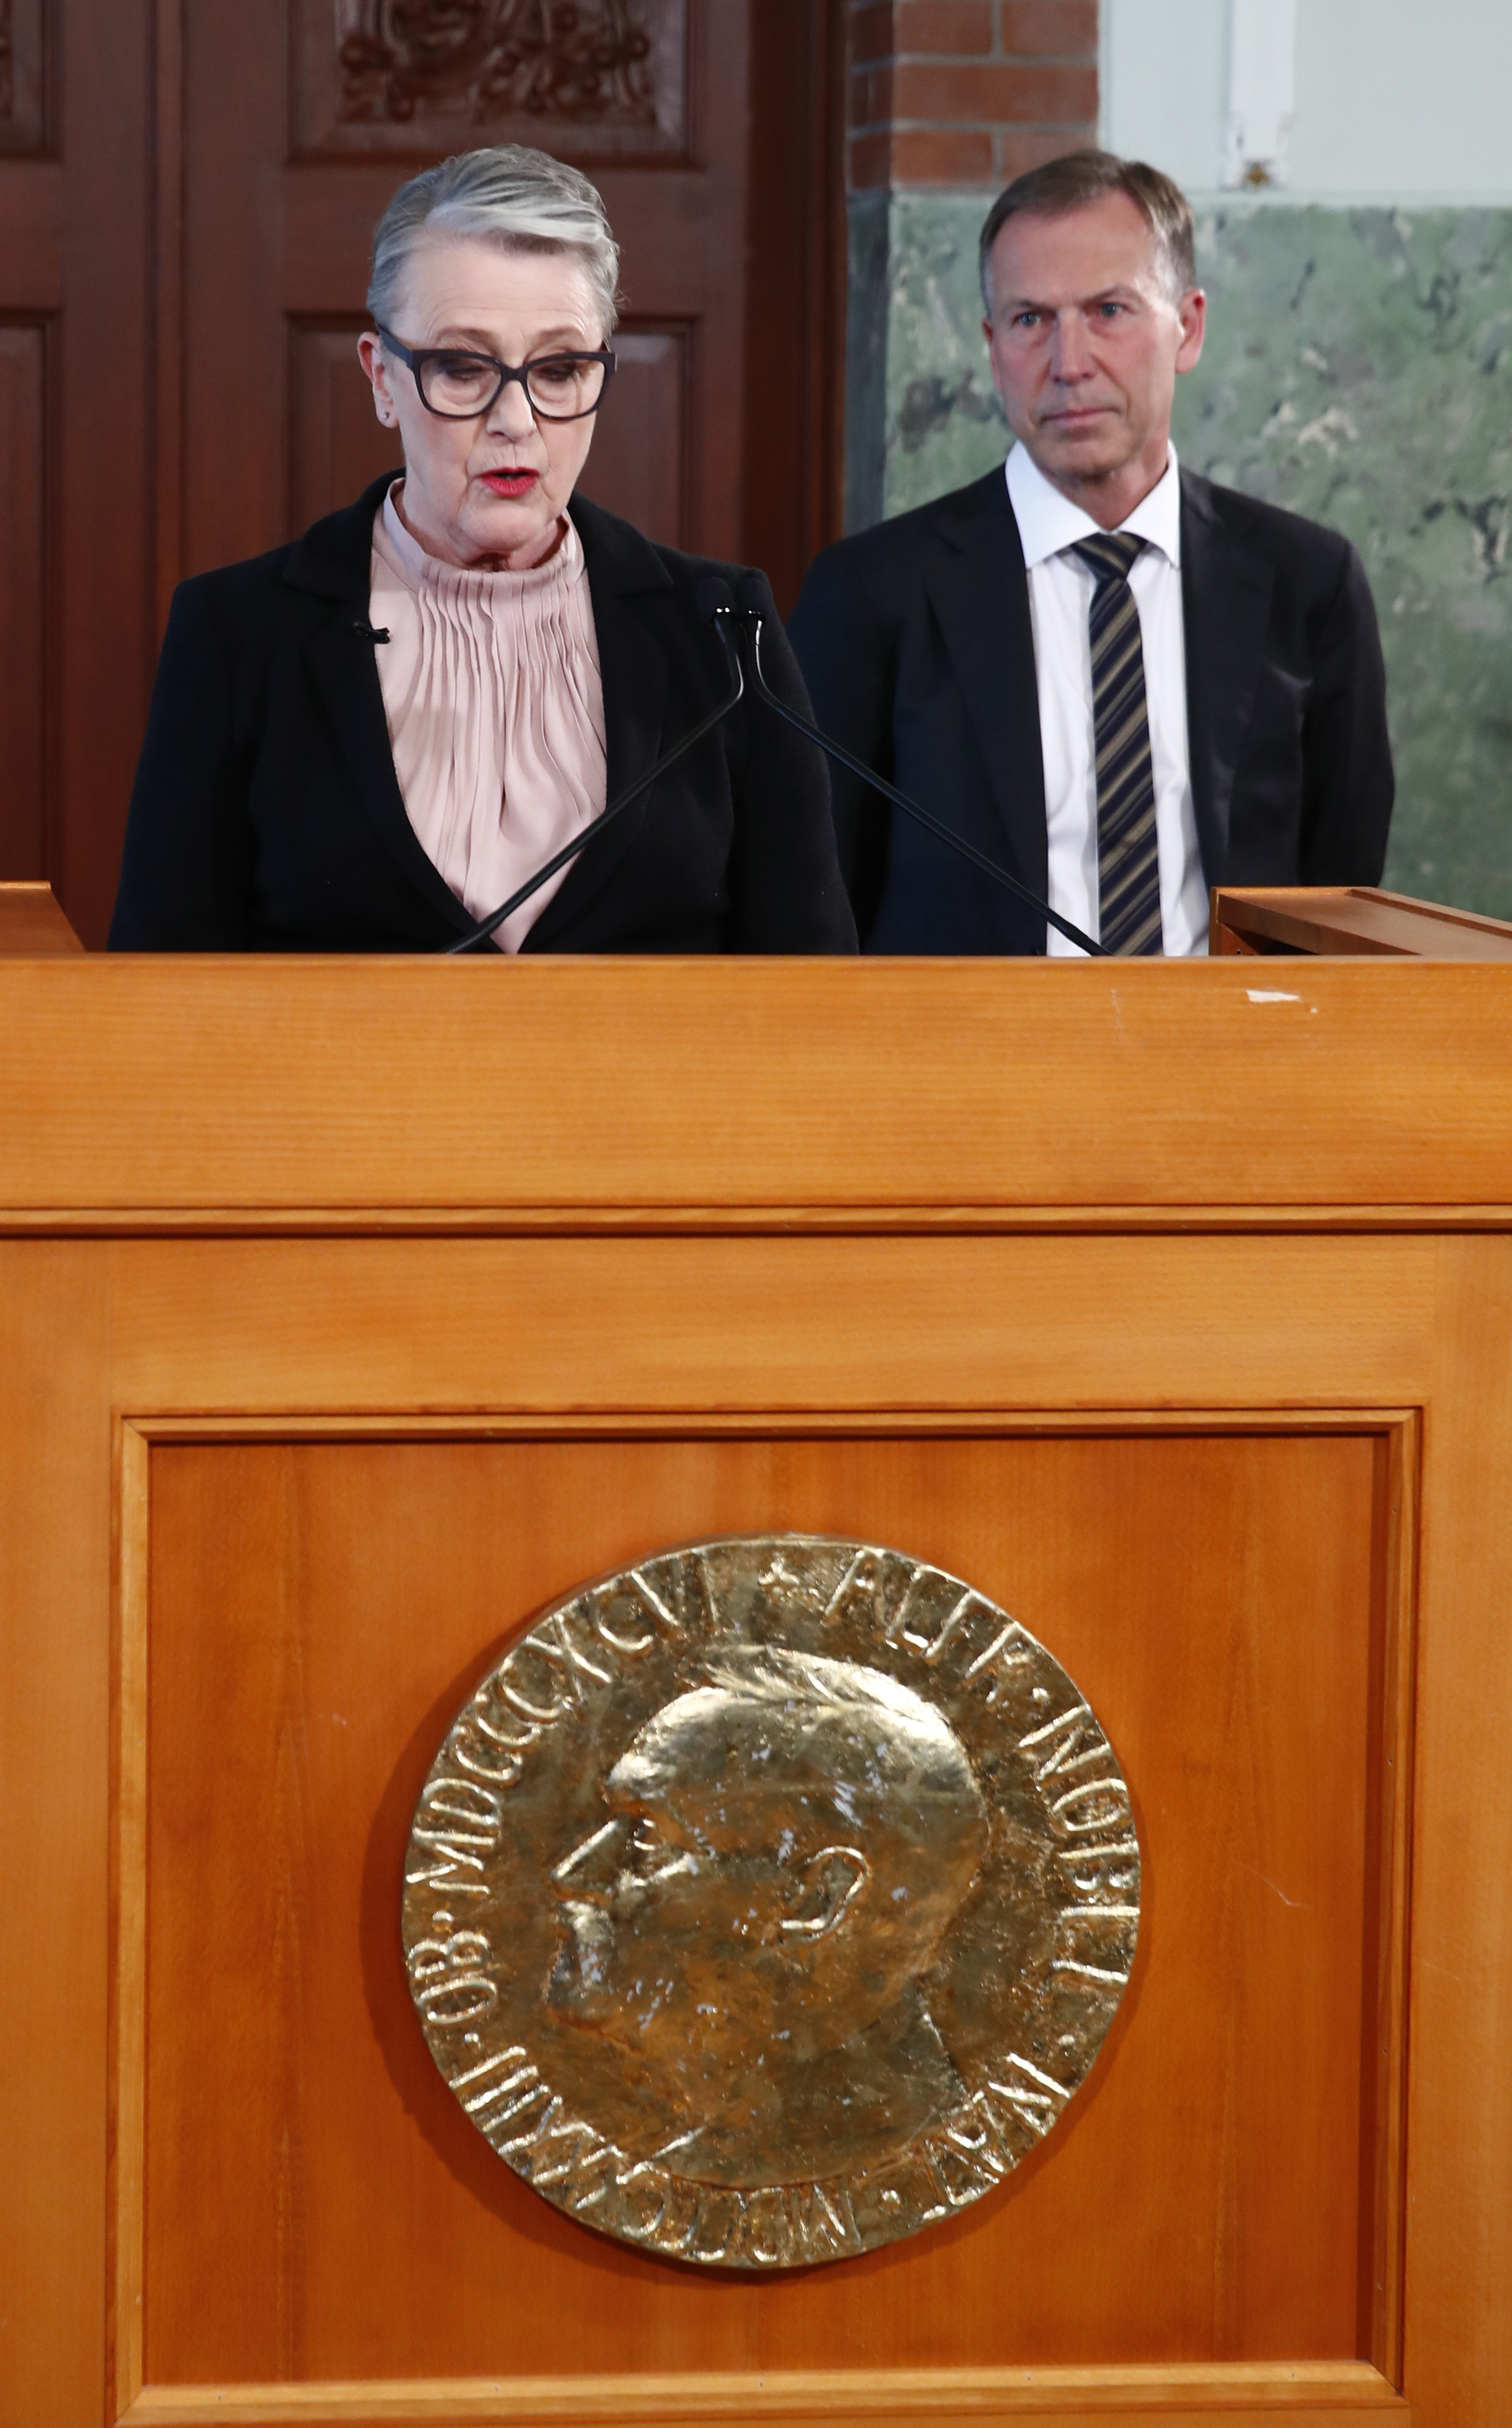 Berit Reiss-Andersen announces the 2018 Nobel Peace Prize